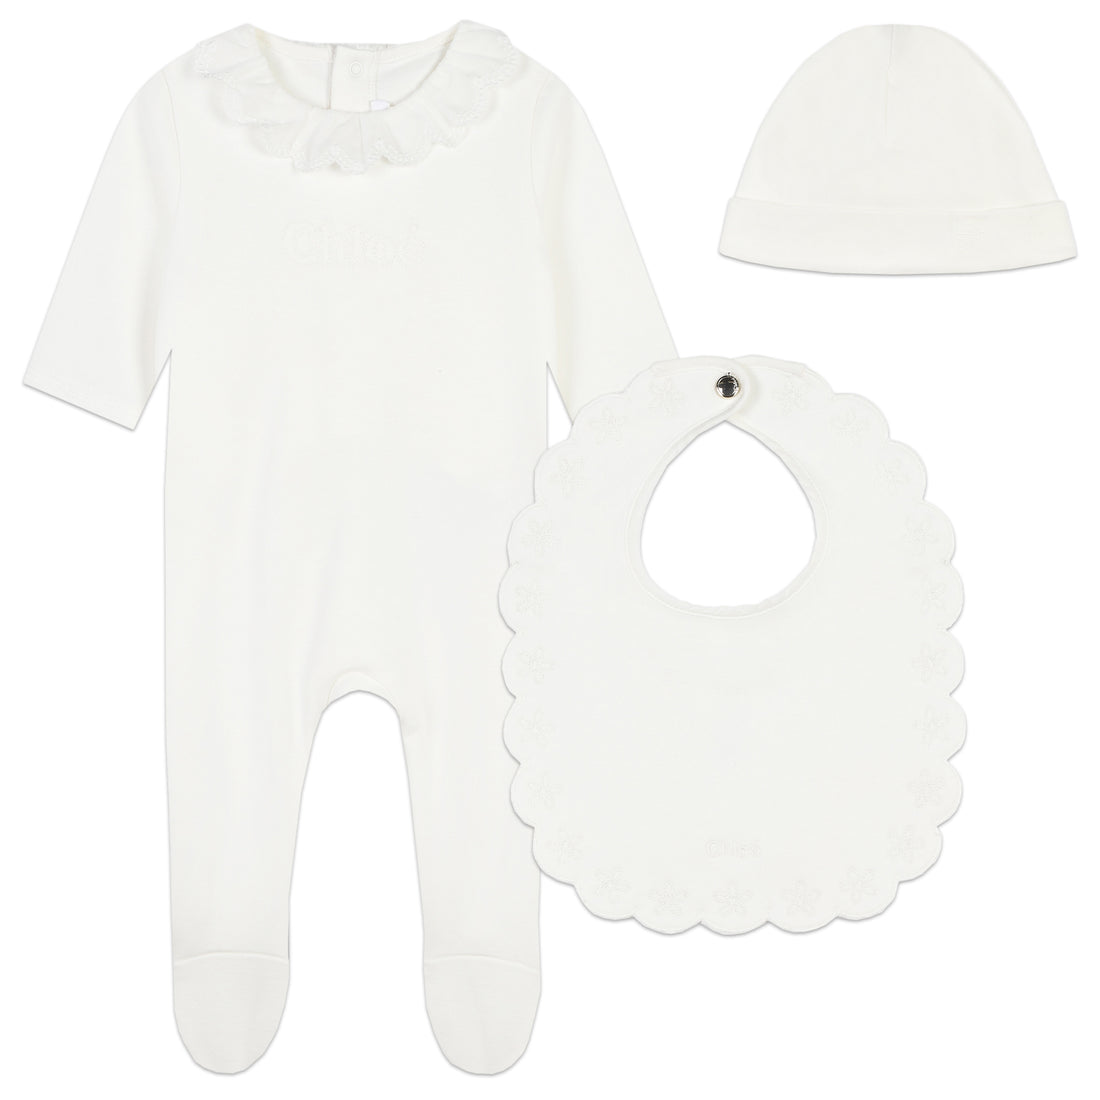 Chloe Pyjamas Offwhite - Comfortable and Elegant Sleepwear for Kids | Schools Out